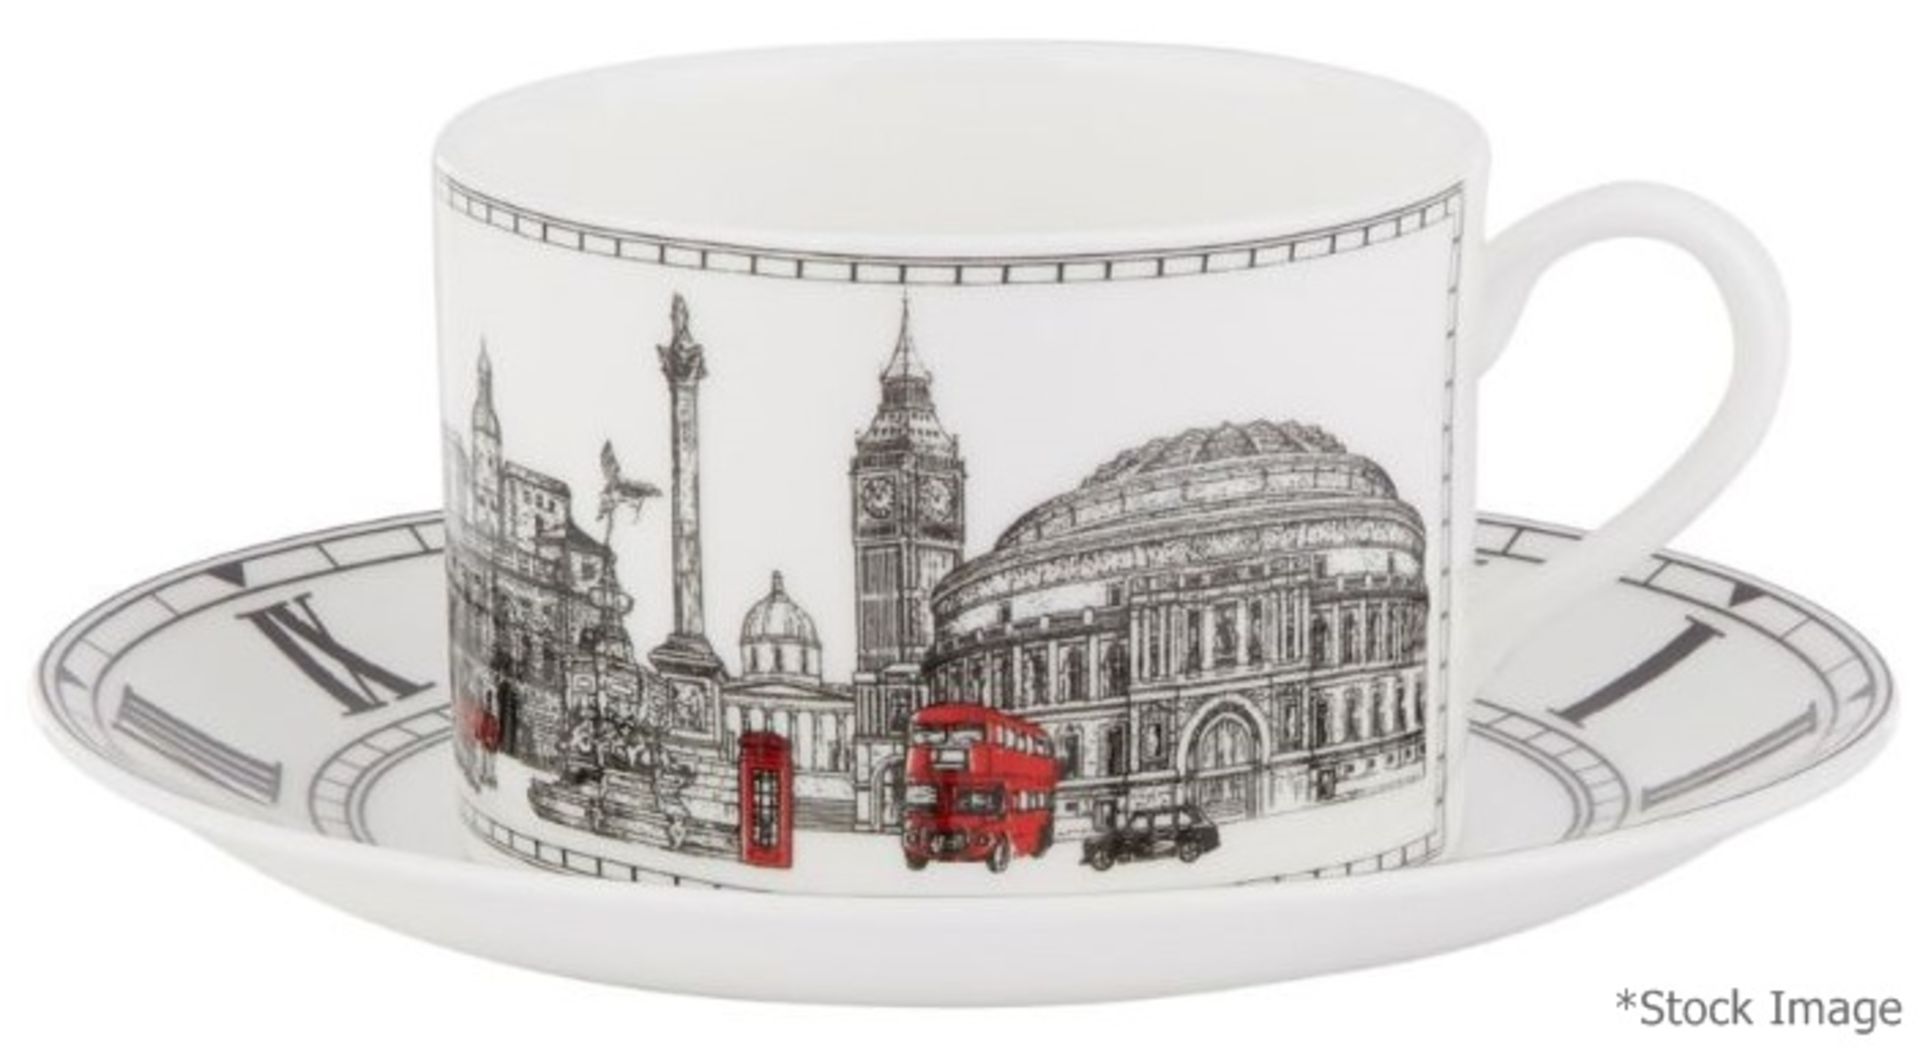 1 x HALCYON DAYS 'London Icons' Bone China Teacup & Saucer - Original Price £79.95 - Read Condition